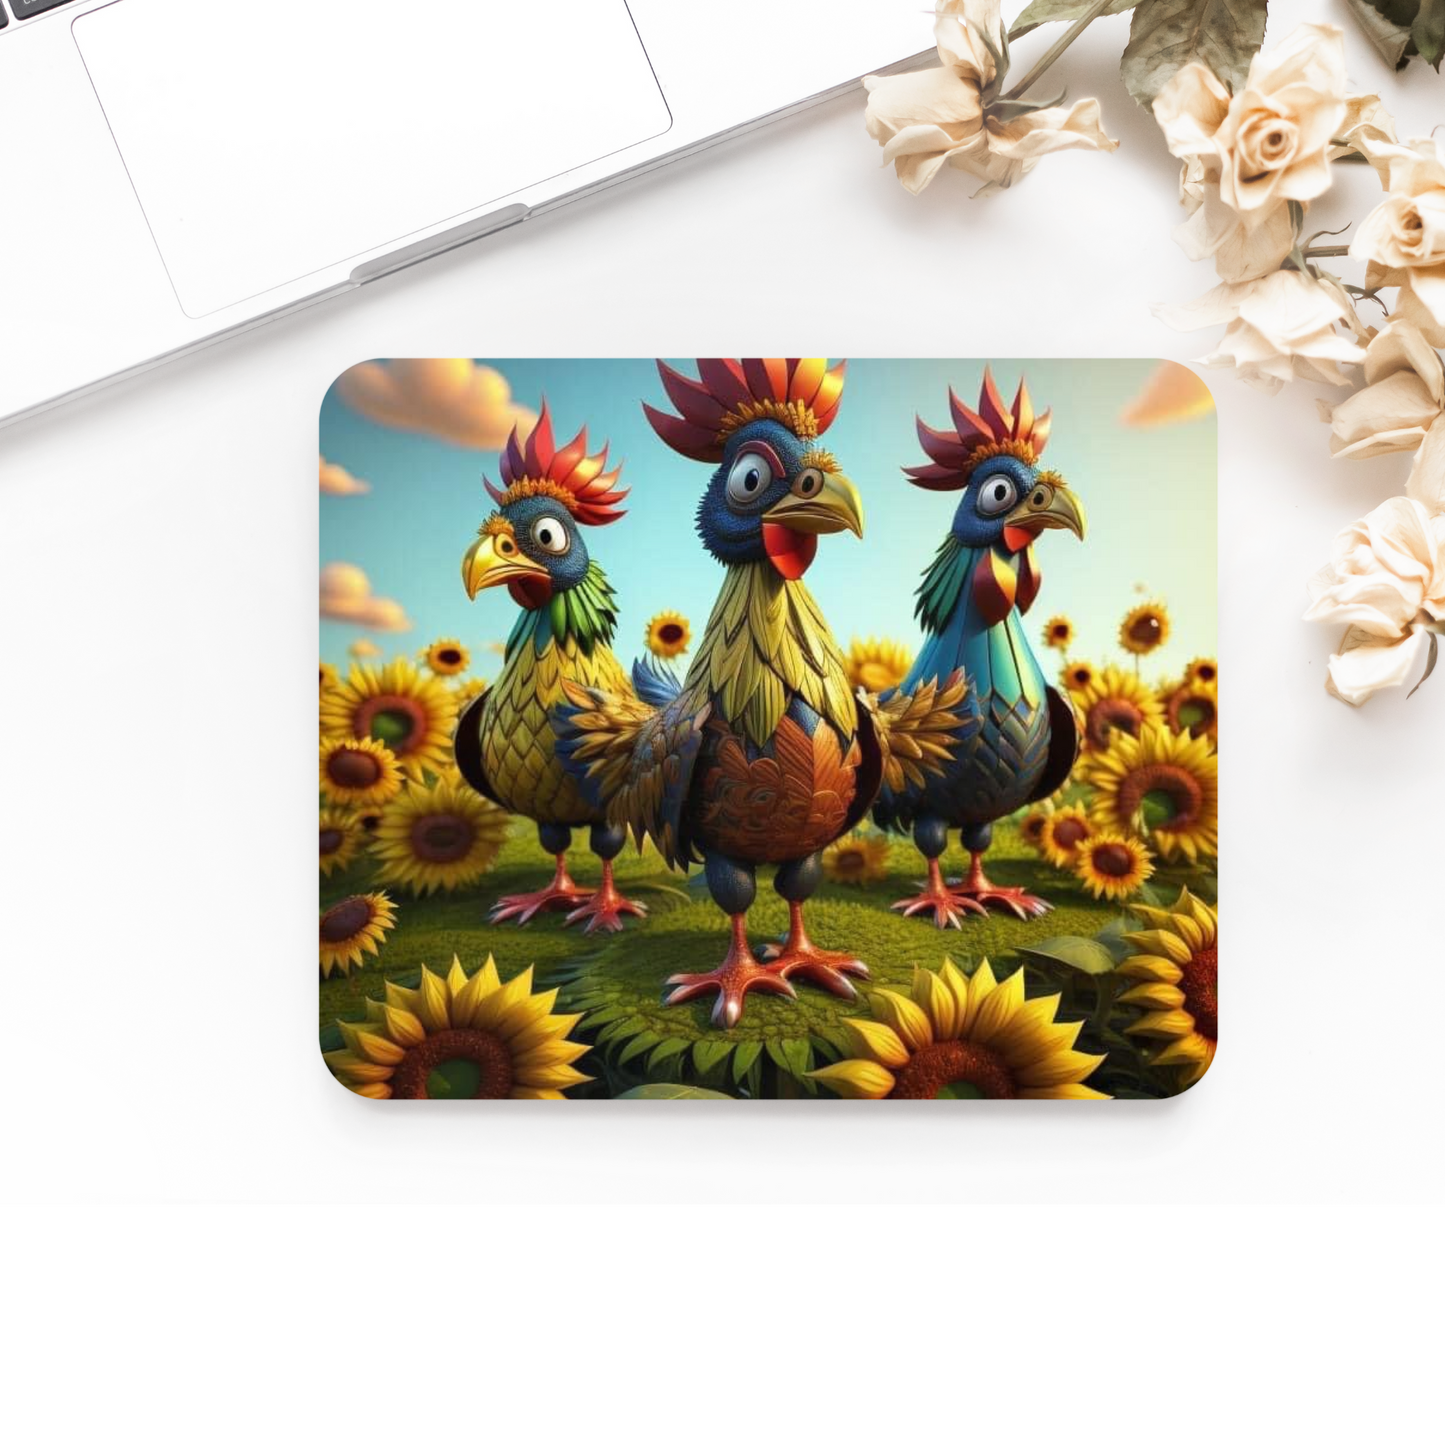 Premium Printed Anti-Slip Mouse Mat - Ultra Durable chickens Design